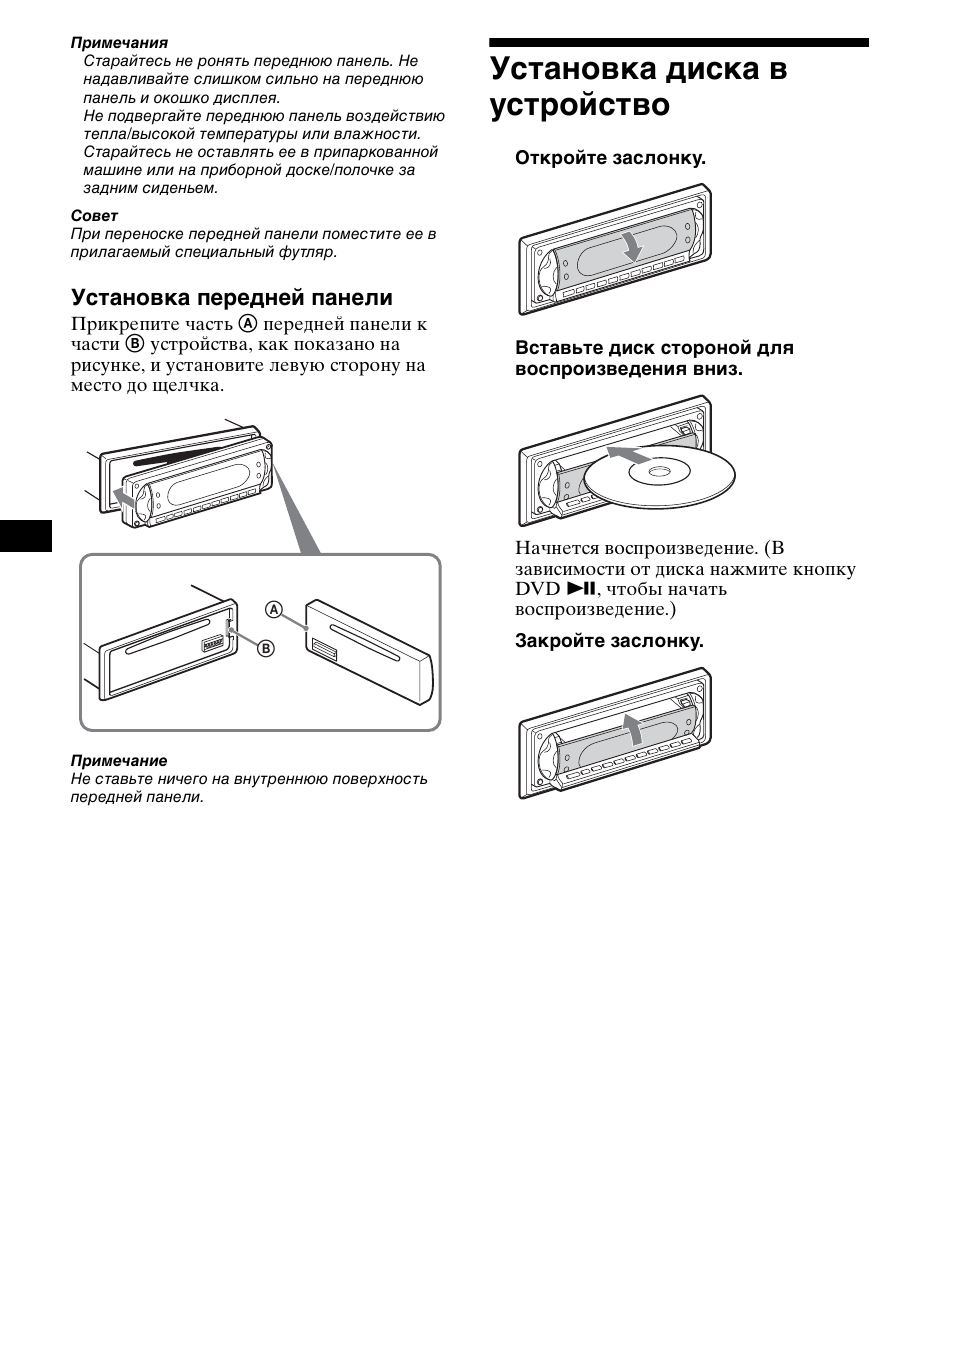 Установка диска в устройство | Инструкция по эксплуатации Sony MEX-R5 | Страница 10 / 64